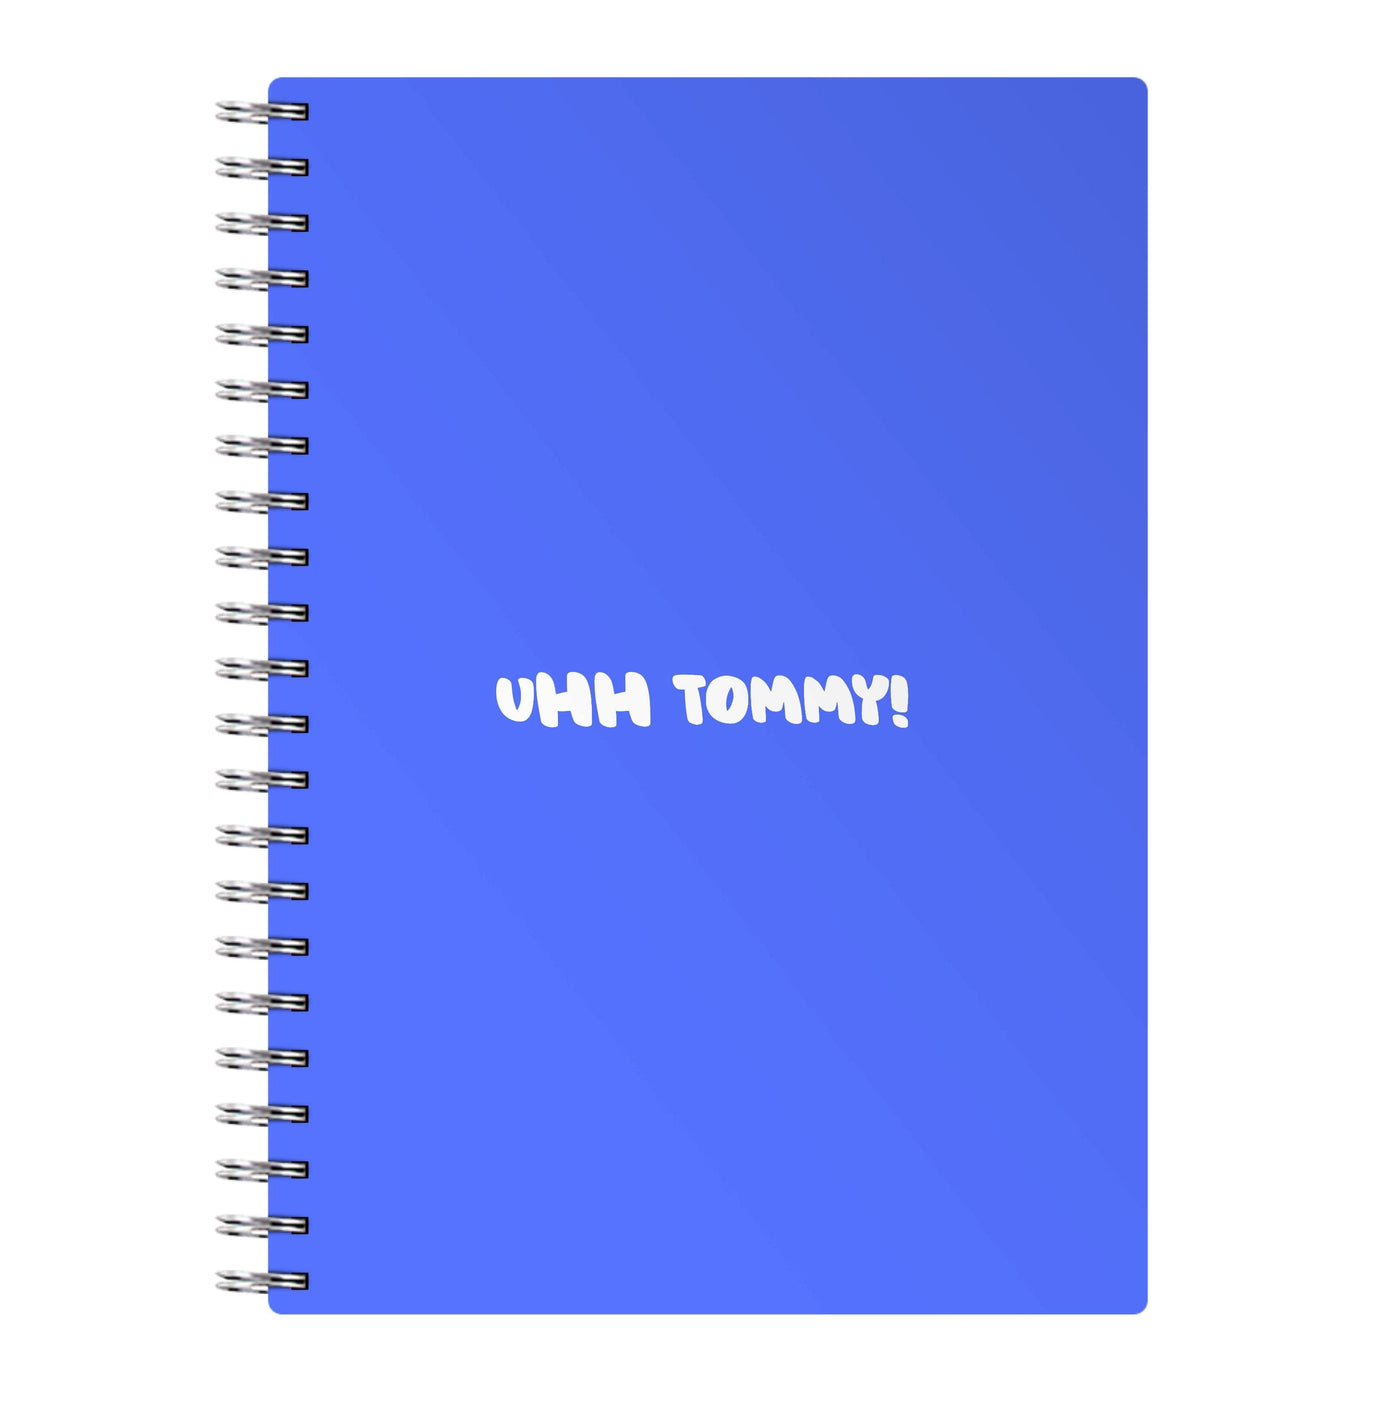 Uhh Tommy! - Islanders Notebook